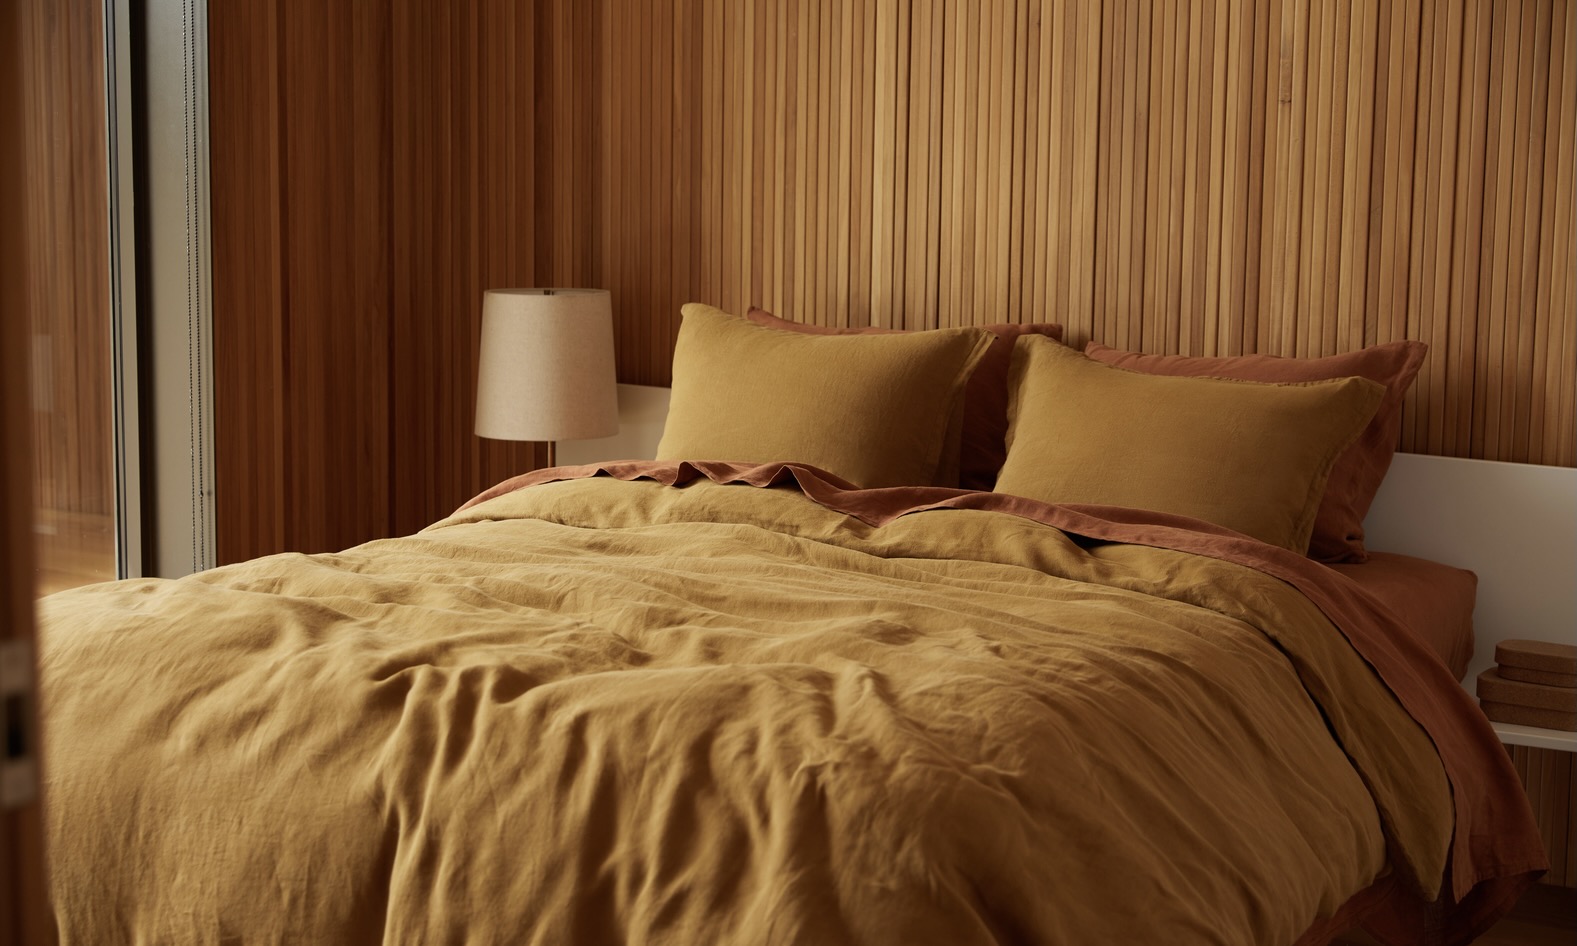 Warm Comforter Duvet Blanket Quilted Soft Winter Bed Sheet Cover Modern Stylish 